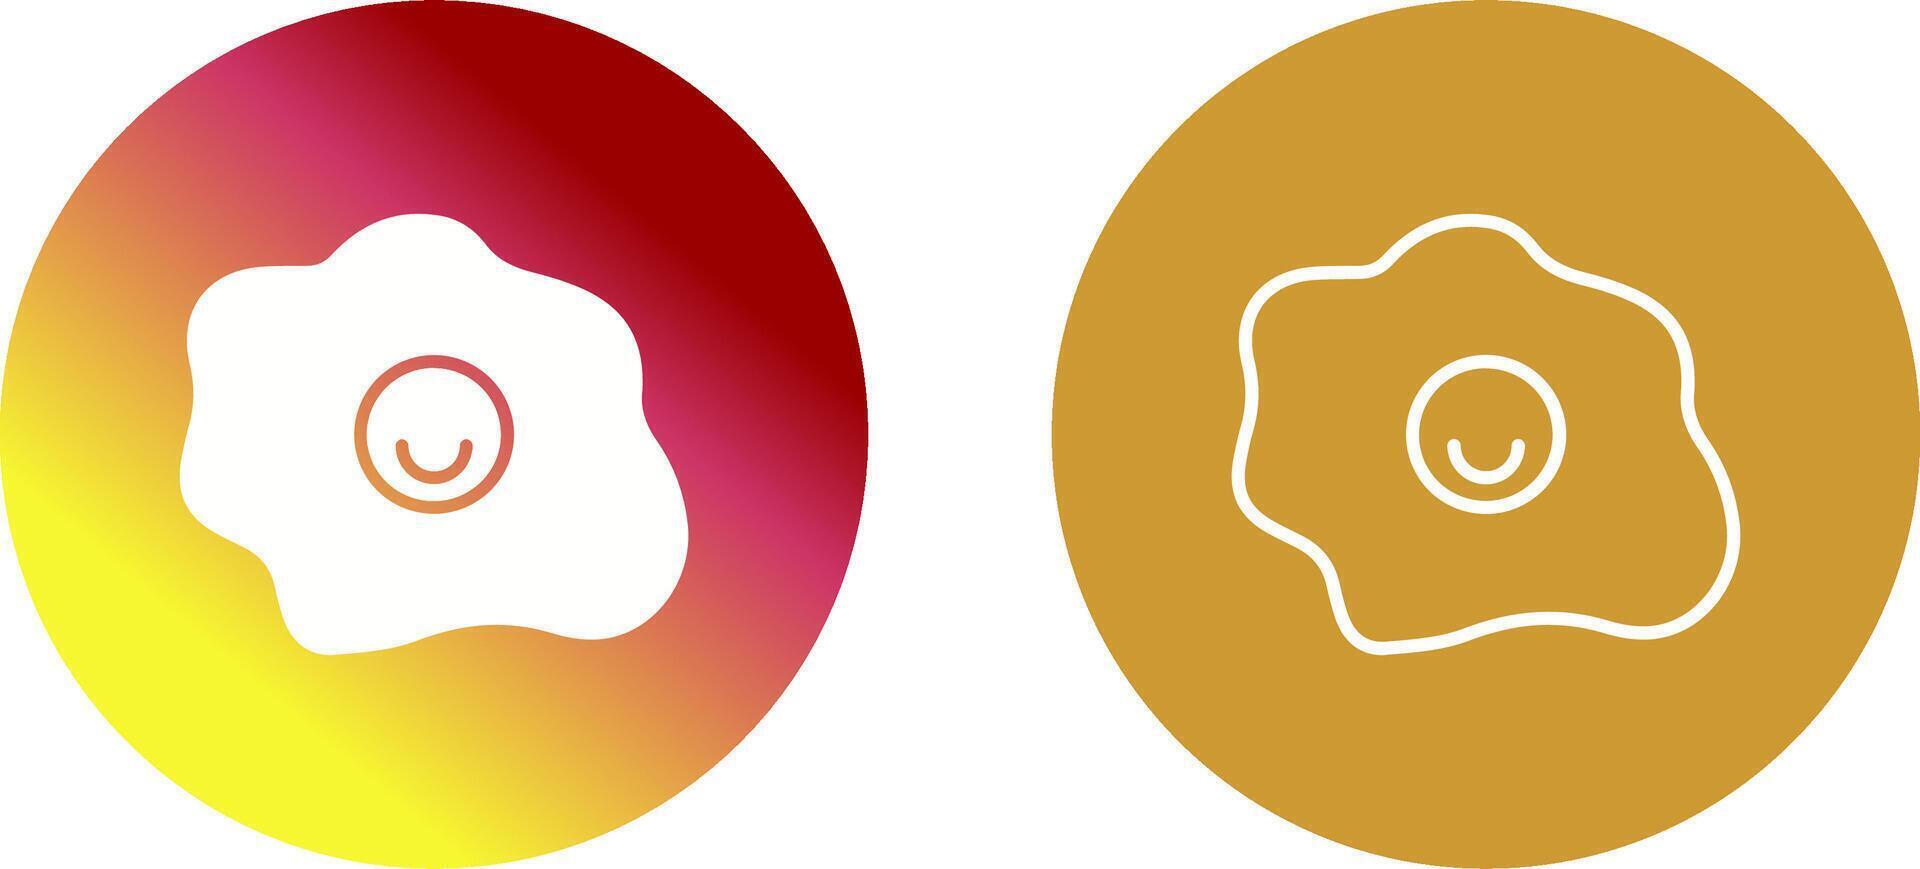 Fried Egg Icon Design vector